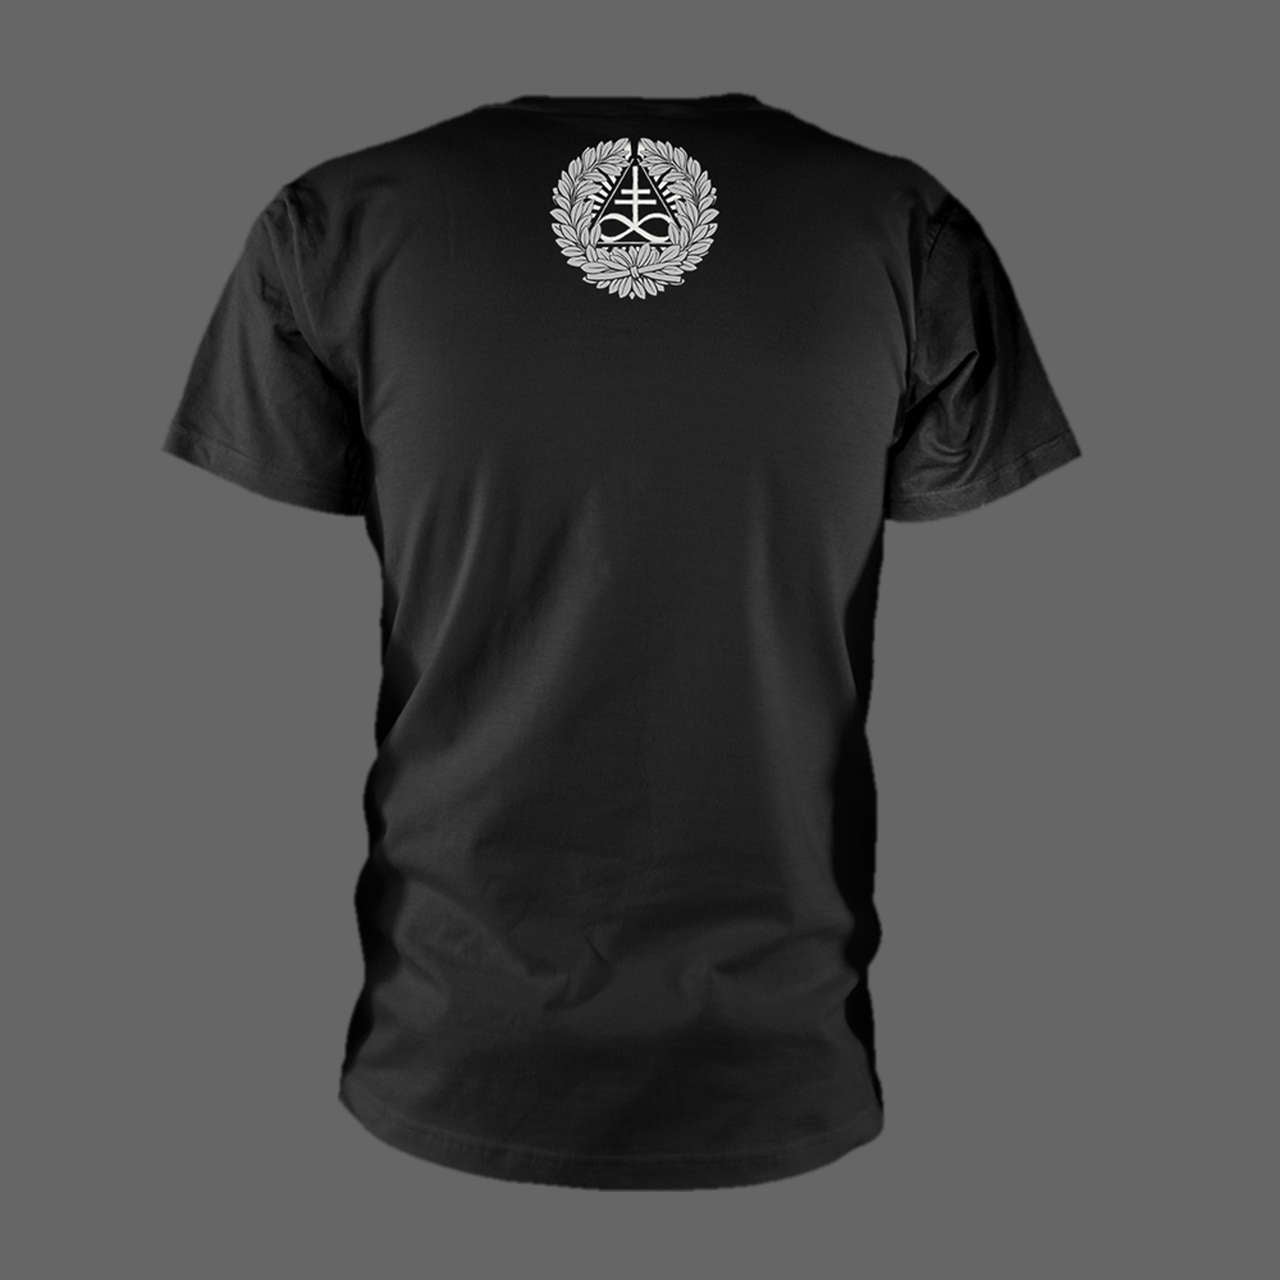 Behemoth - Abyssus Abyssum Invocat (T-Shirt)